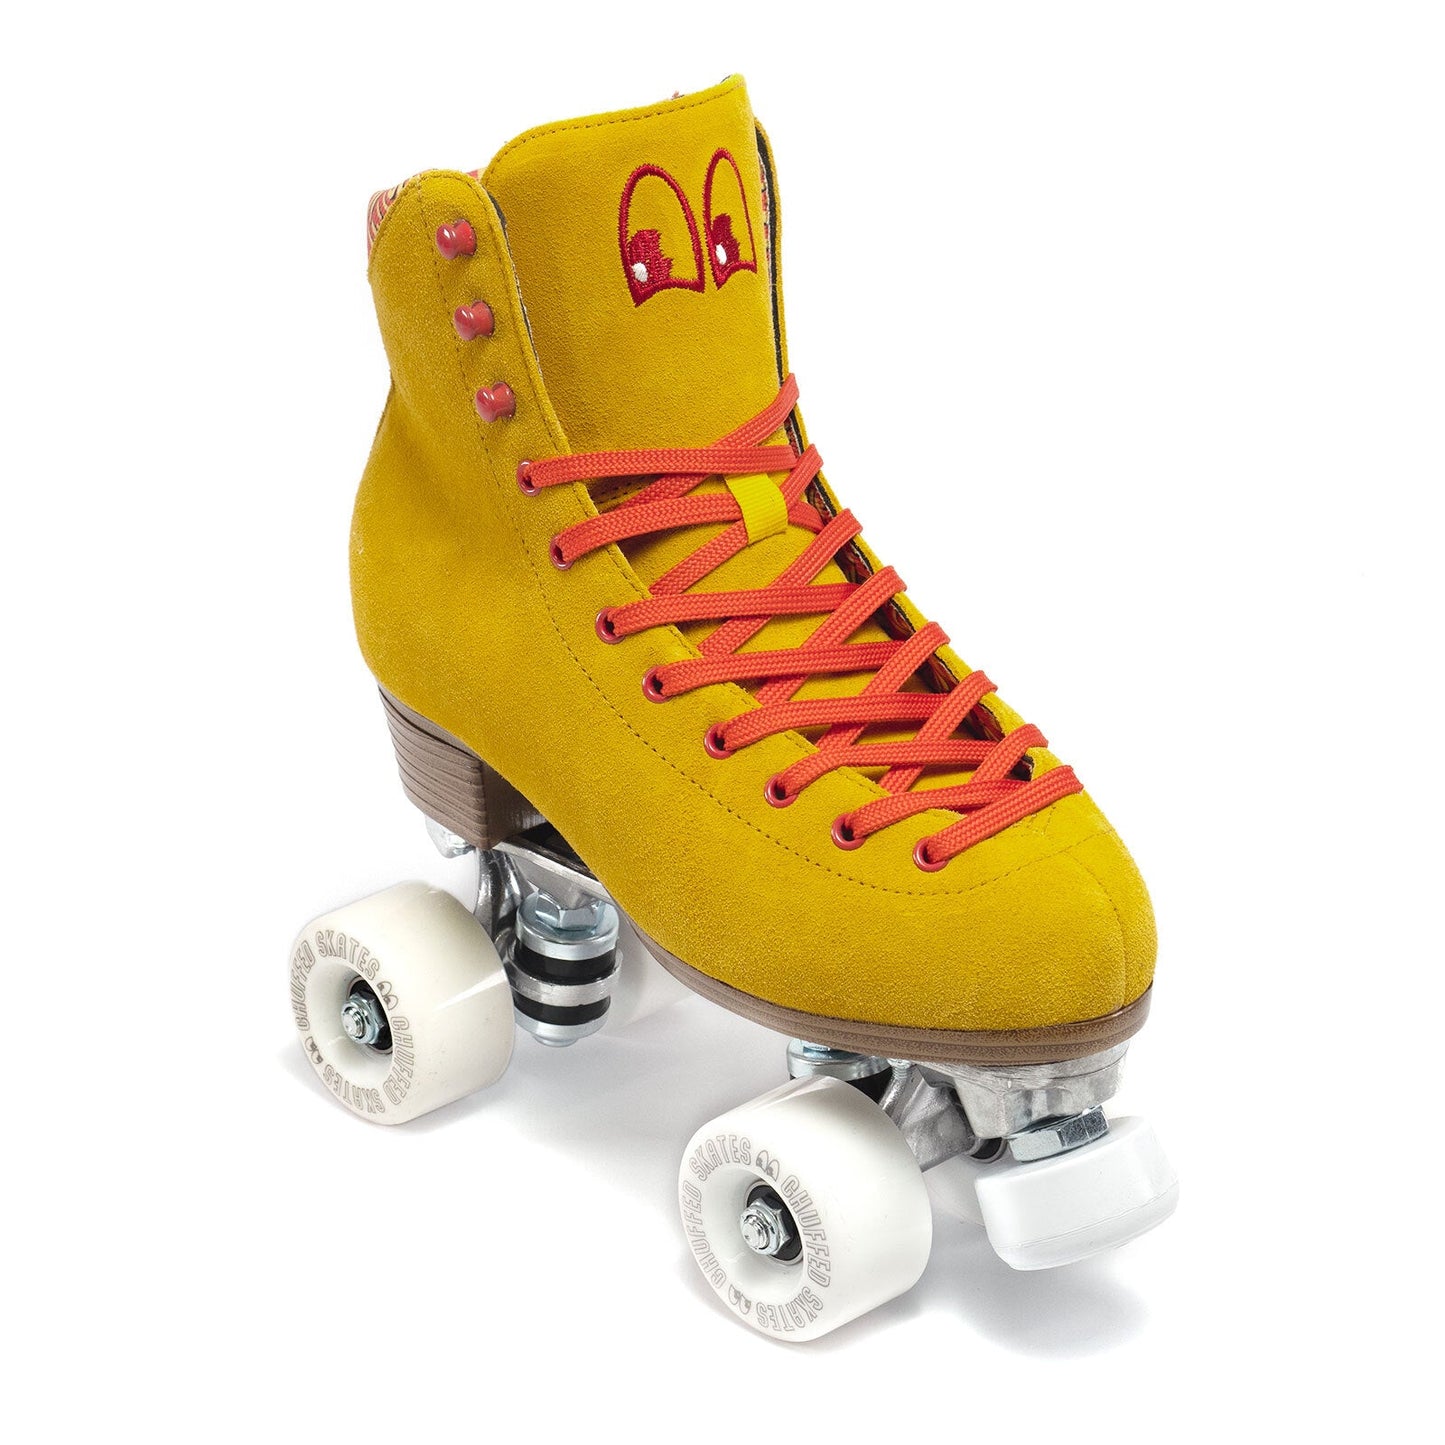 Chuffed Skates yellow roller skates